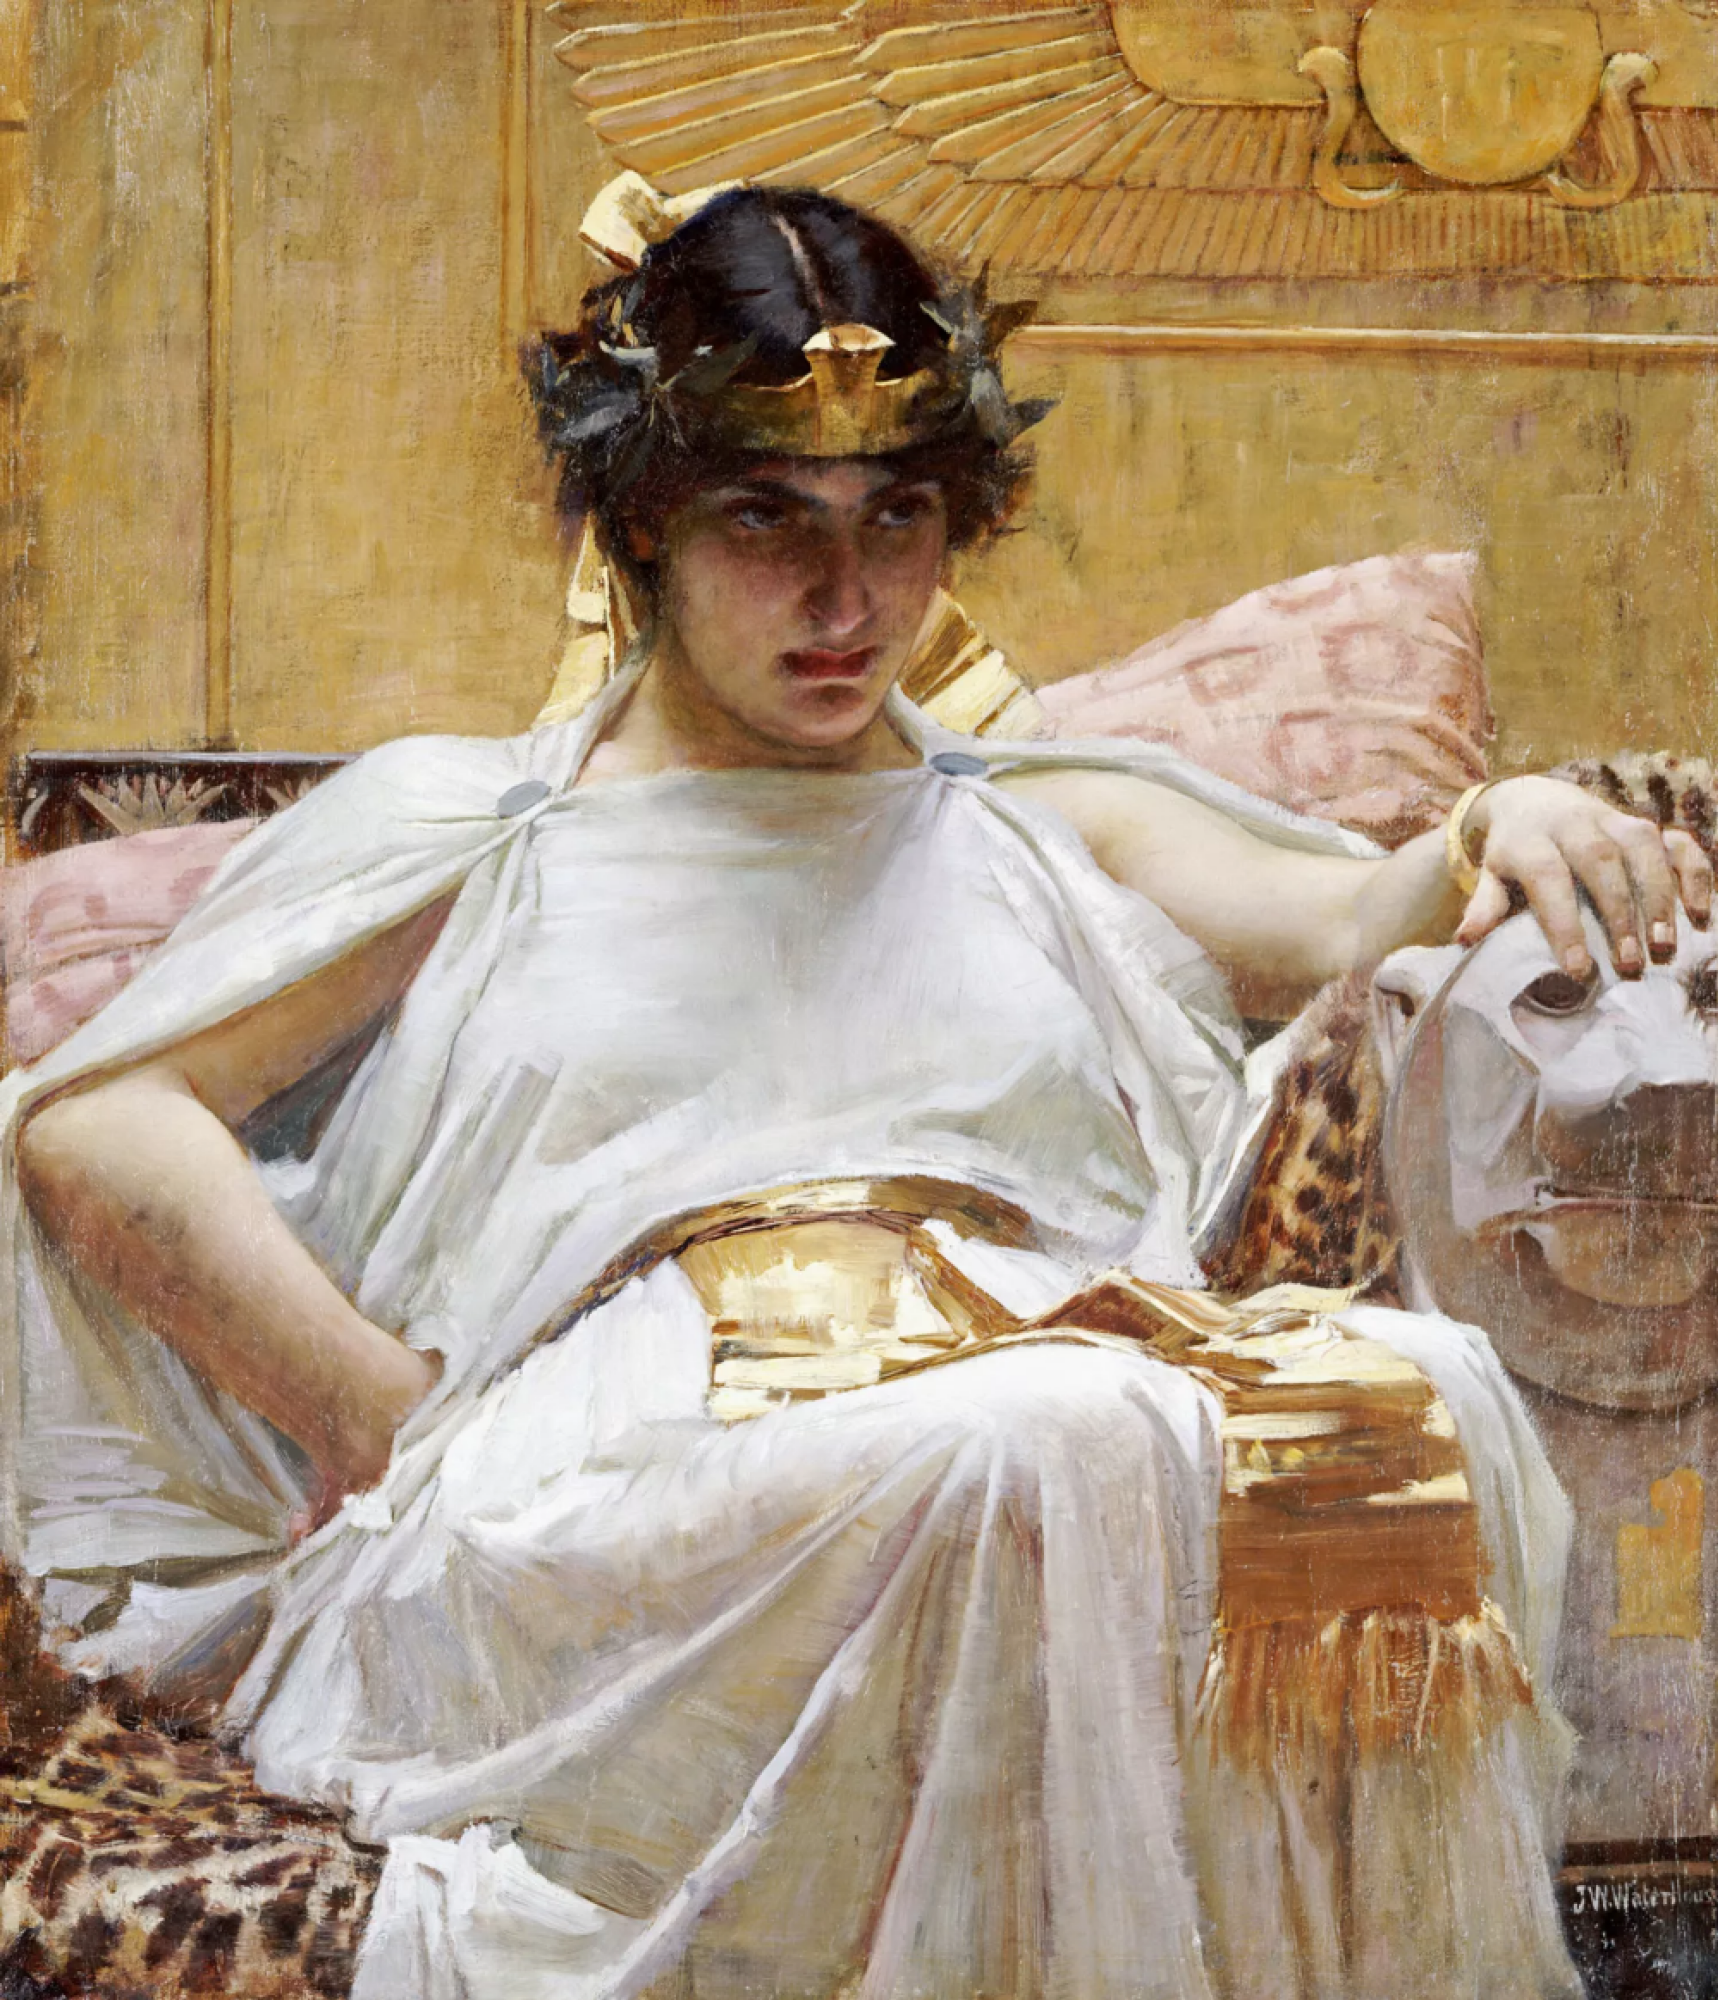 The Other Ptolemy Girl - Arsinoe IV - Dangerous Women Project